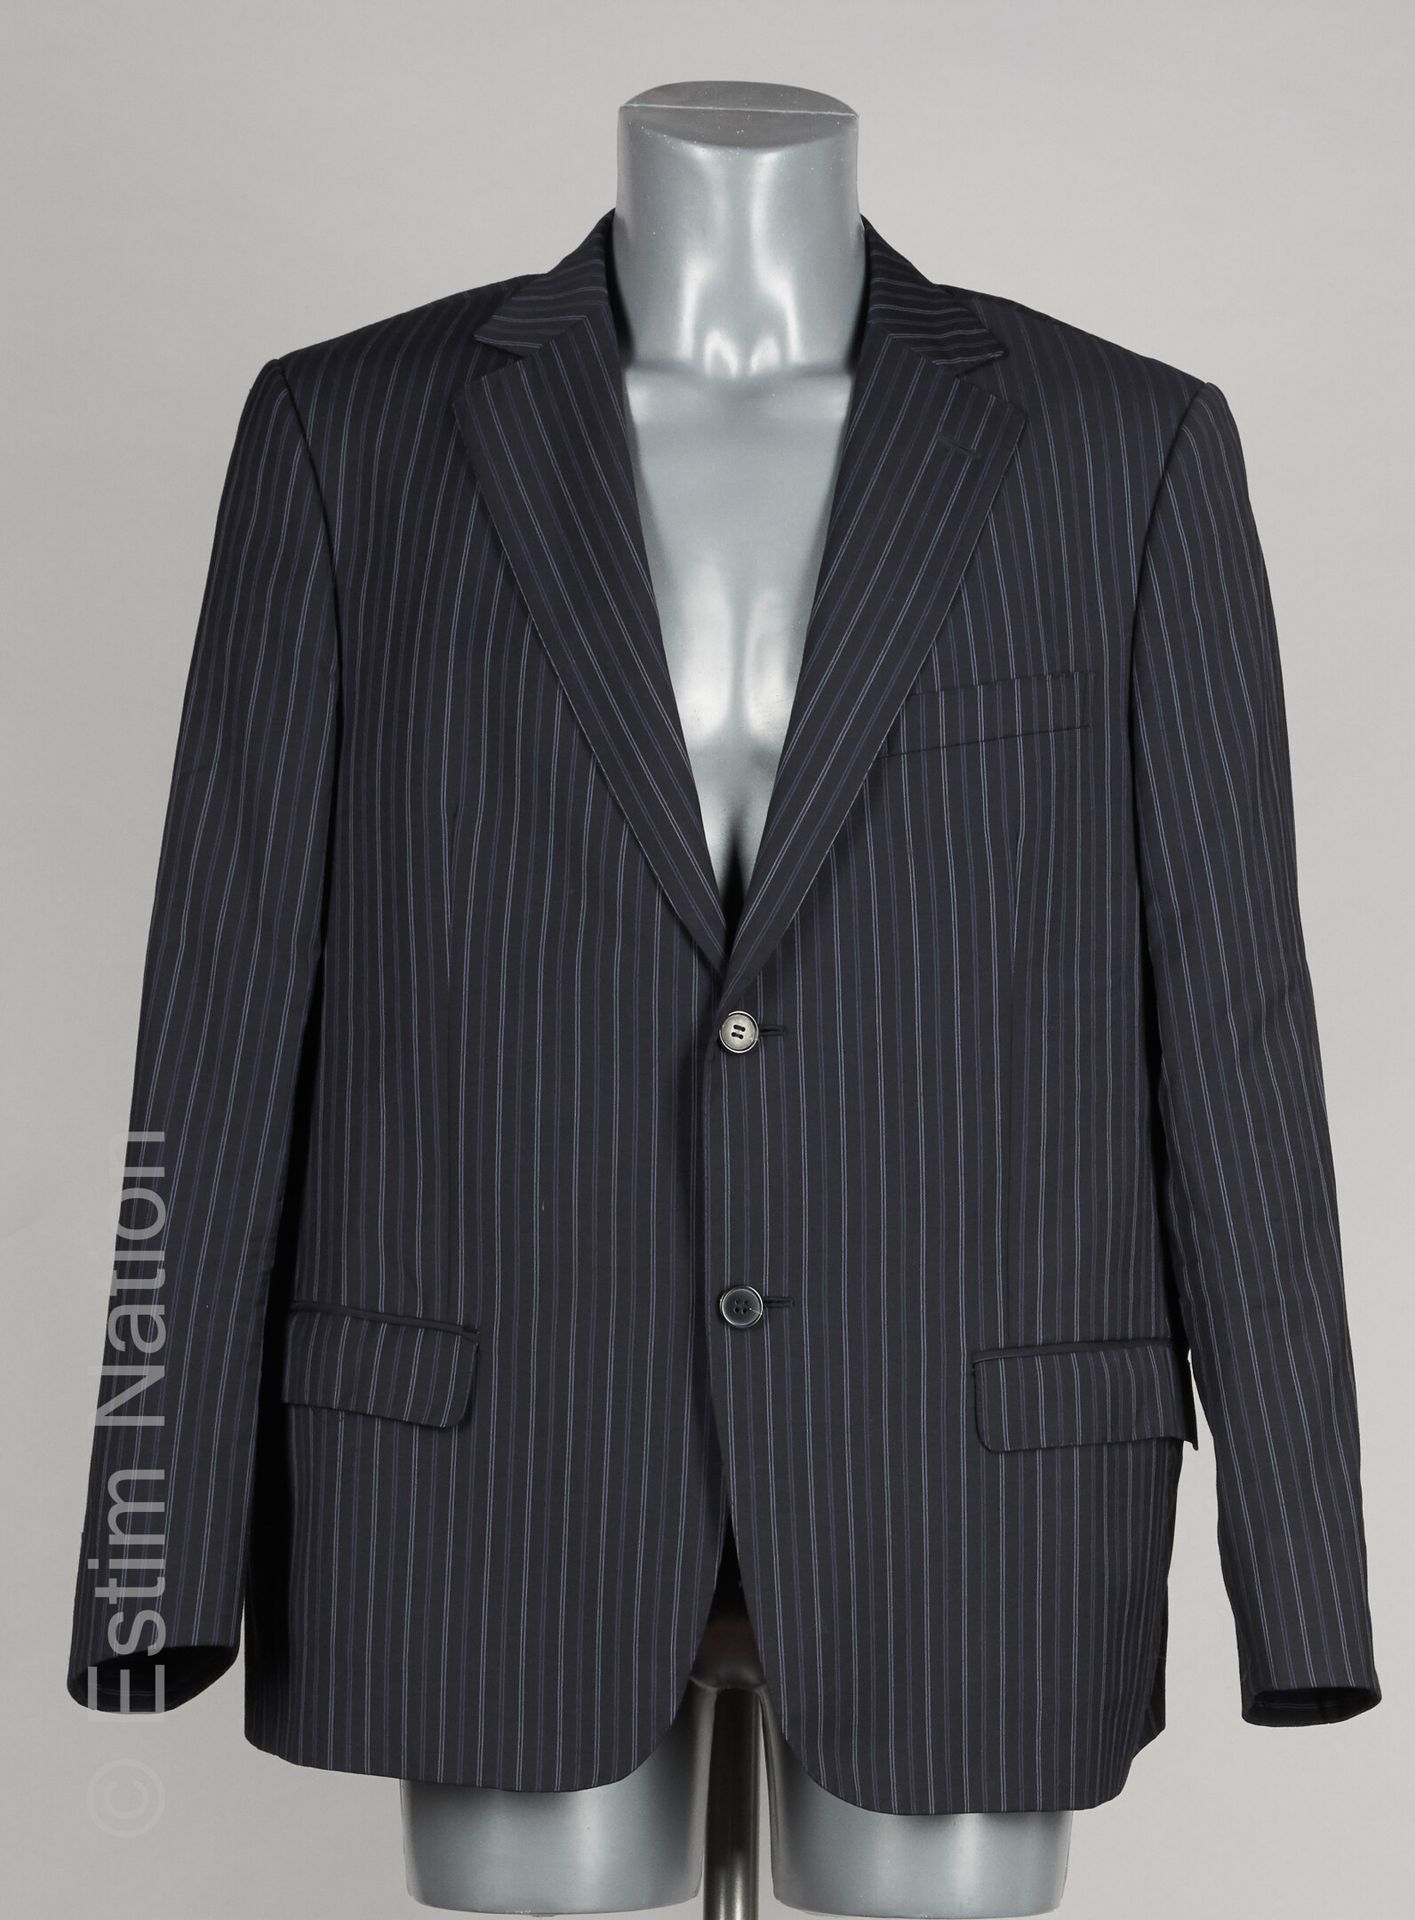 ZEGNA, CANALI, ERMENEGILDO ZEGNA 黑色冷羊毛外套，灰色和紫色网球条纹（T 50 R）（轻微污损），两件经典羊毛长裤：第一件黑色（&hellip;